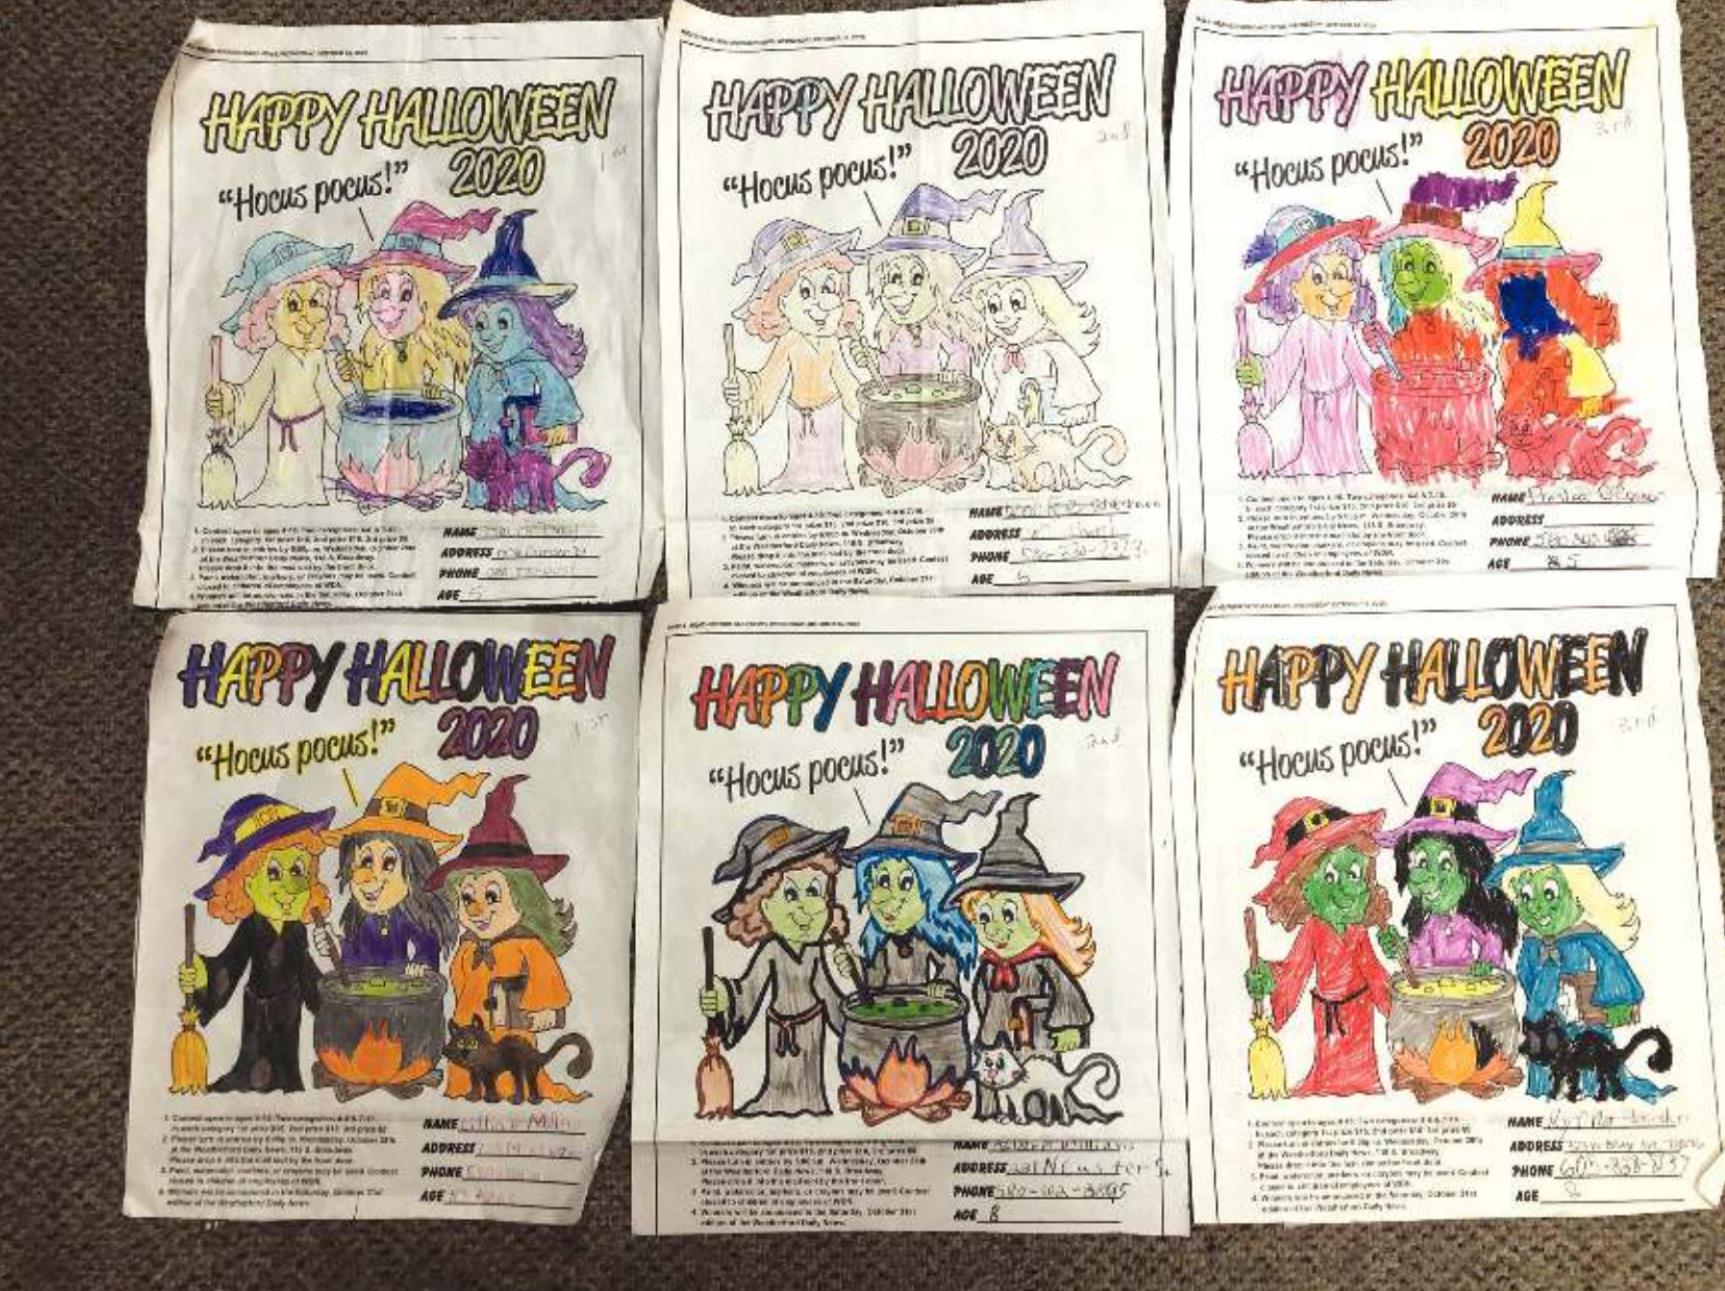 Halloween Coloring Contest winners